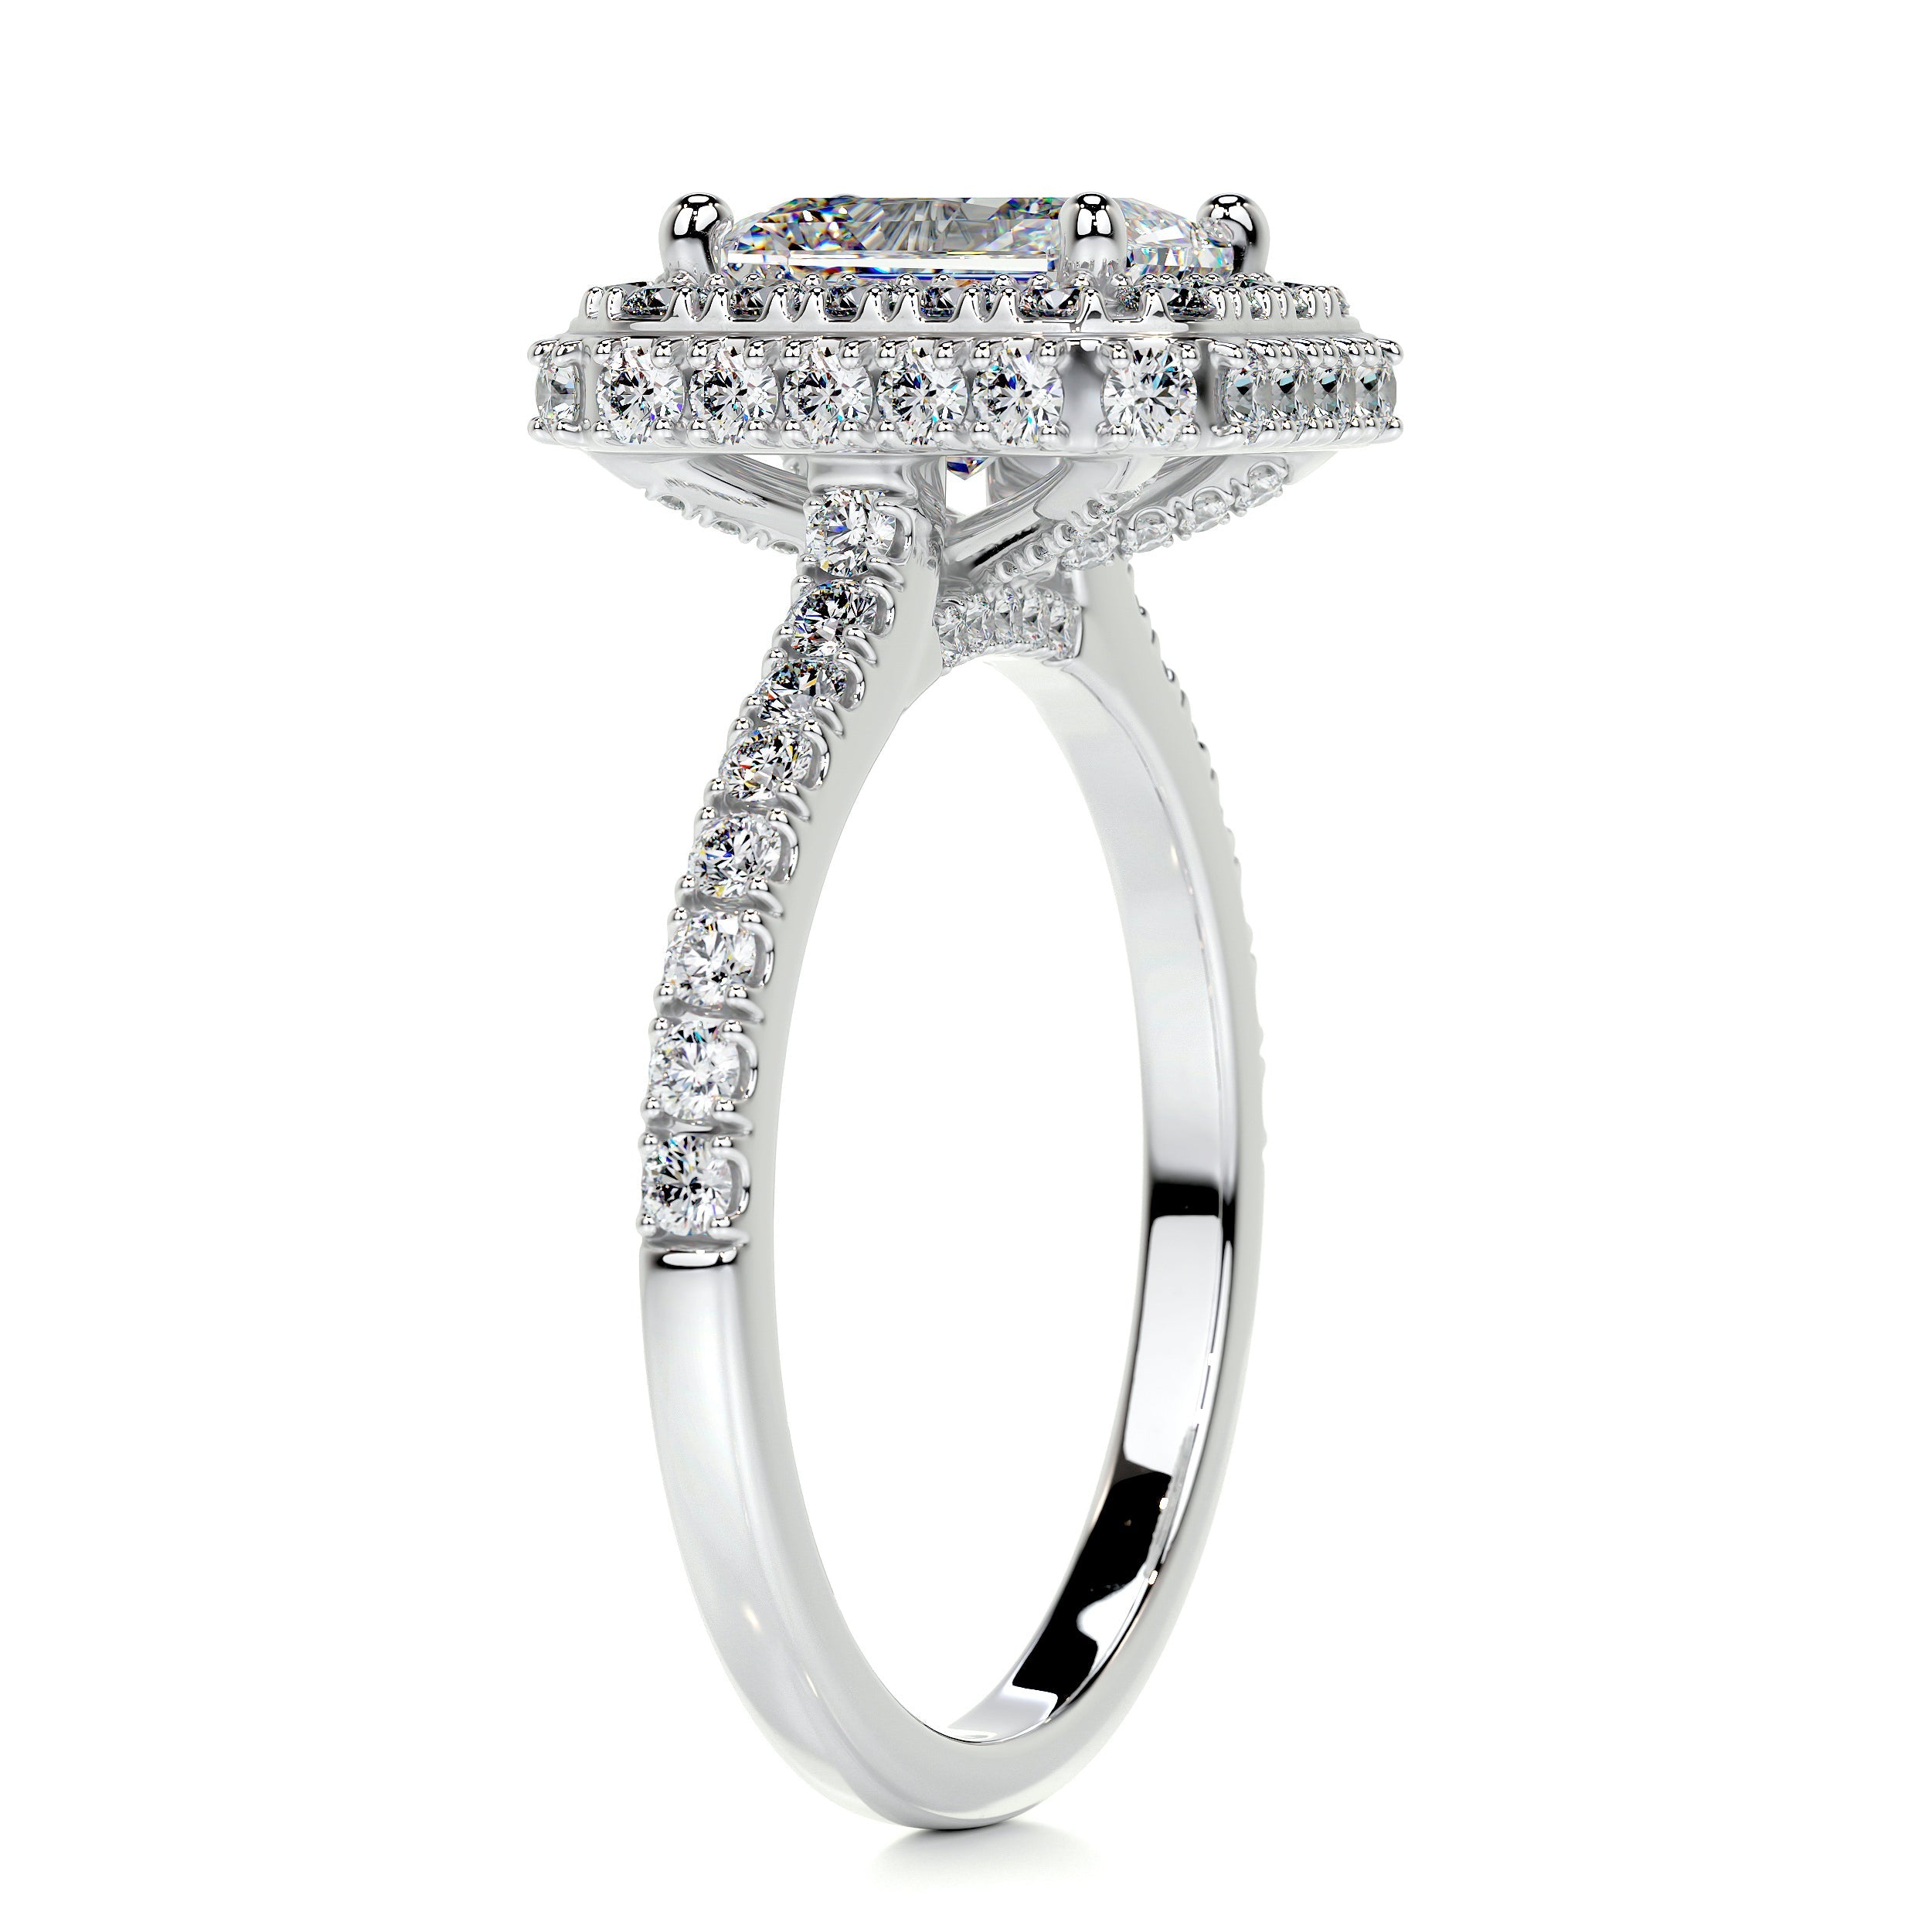 Lana Moissanite & Diamonds Ring   (2.5 Carat) -Platinum